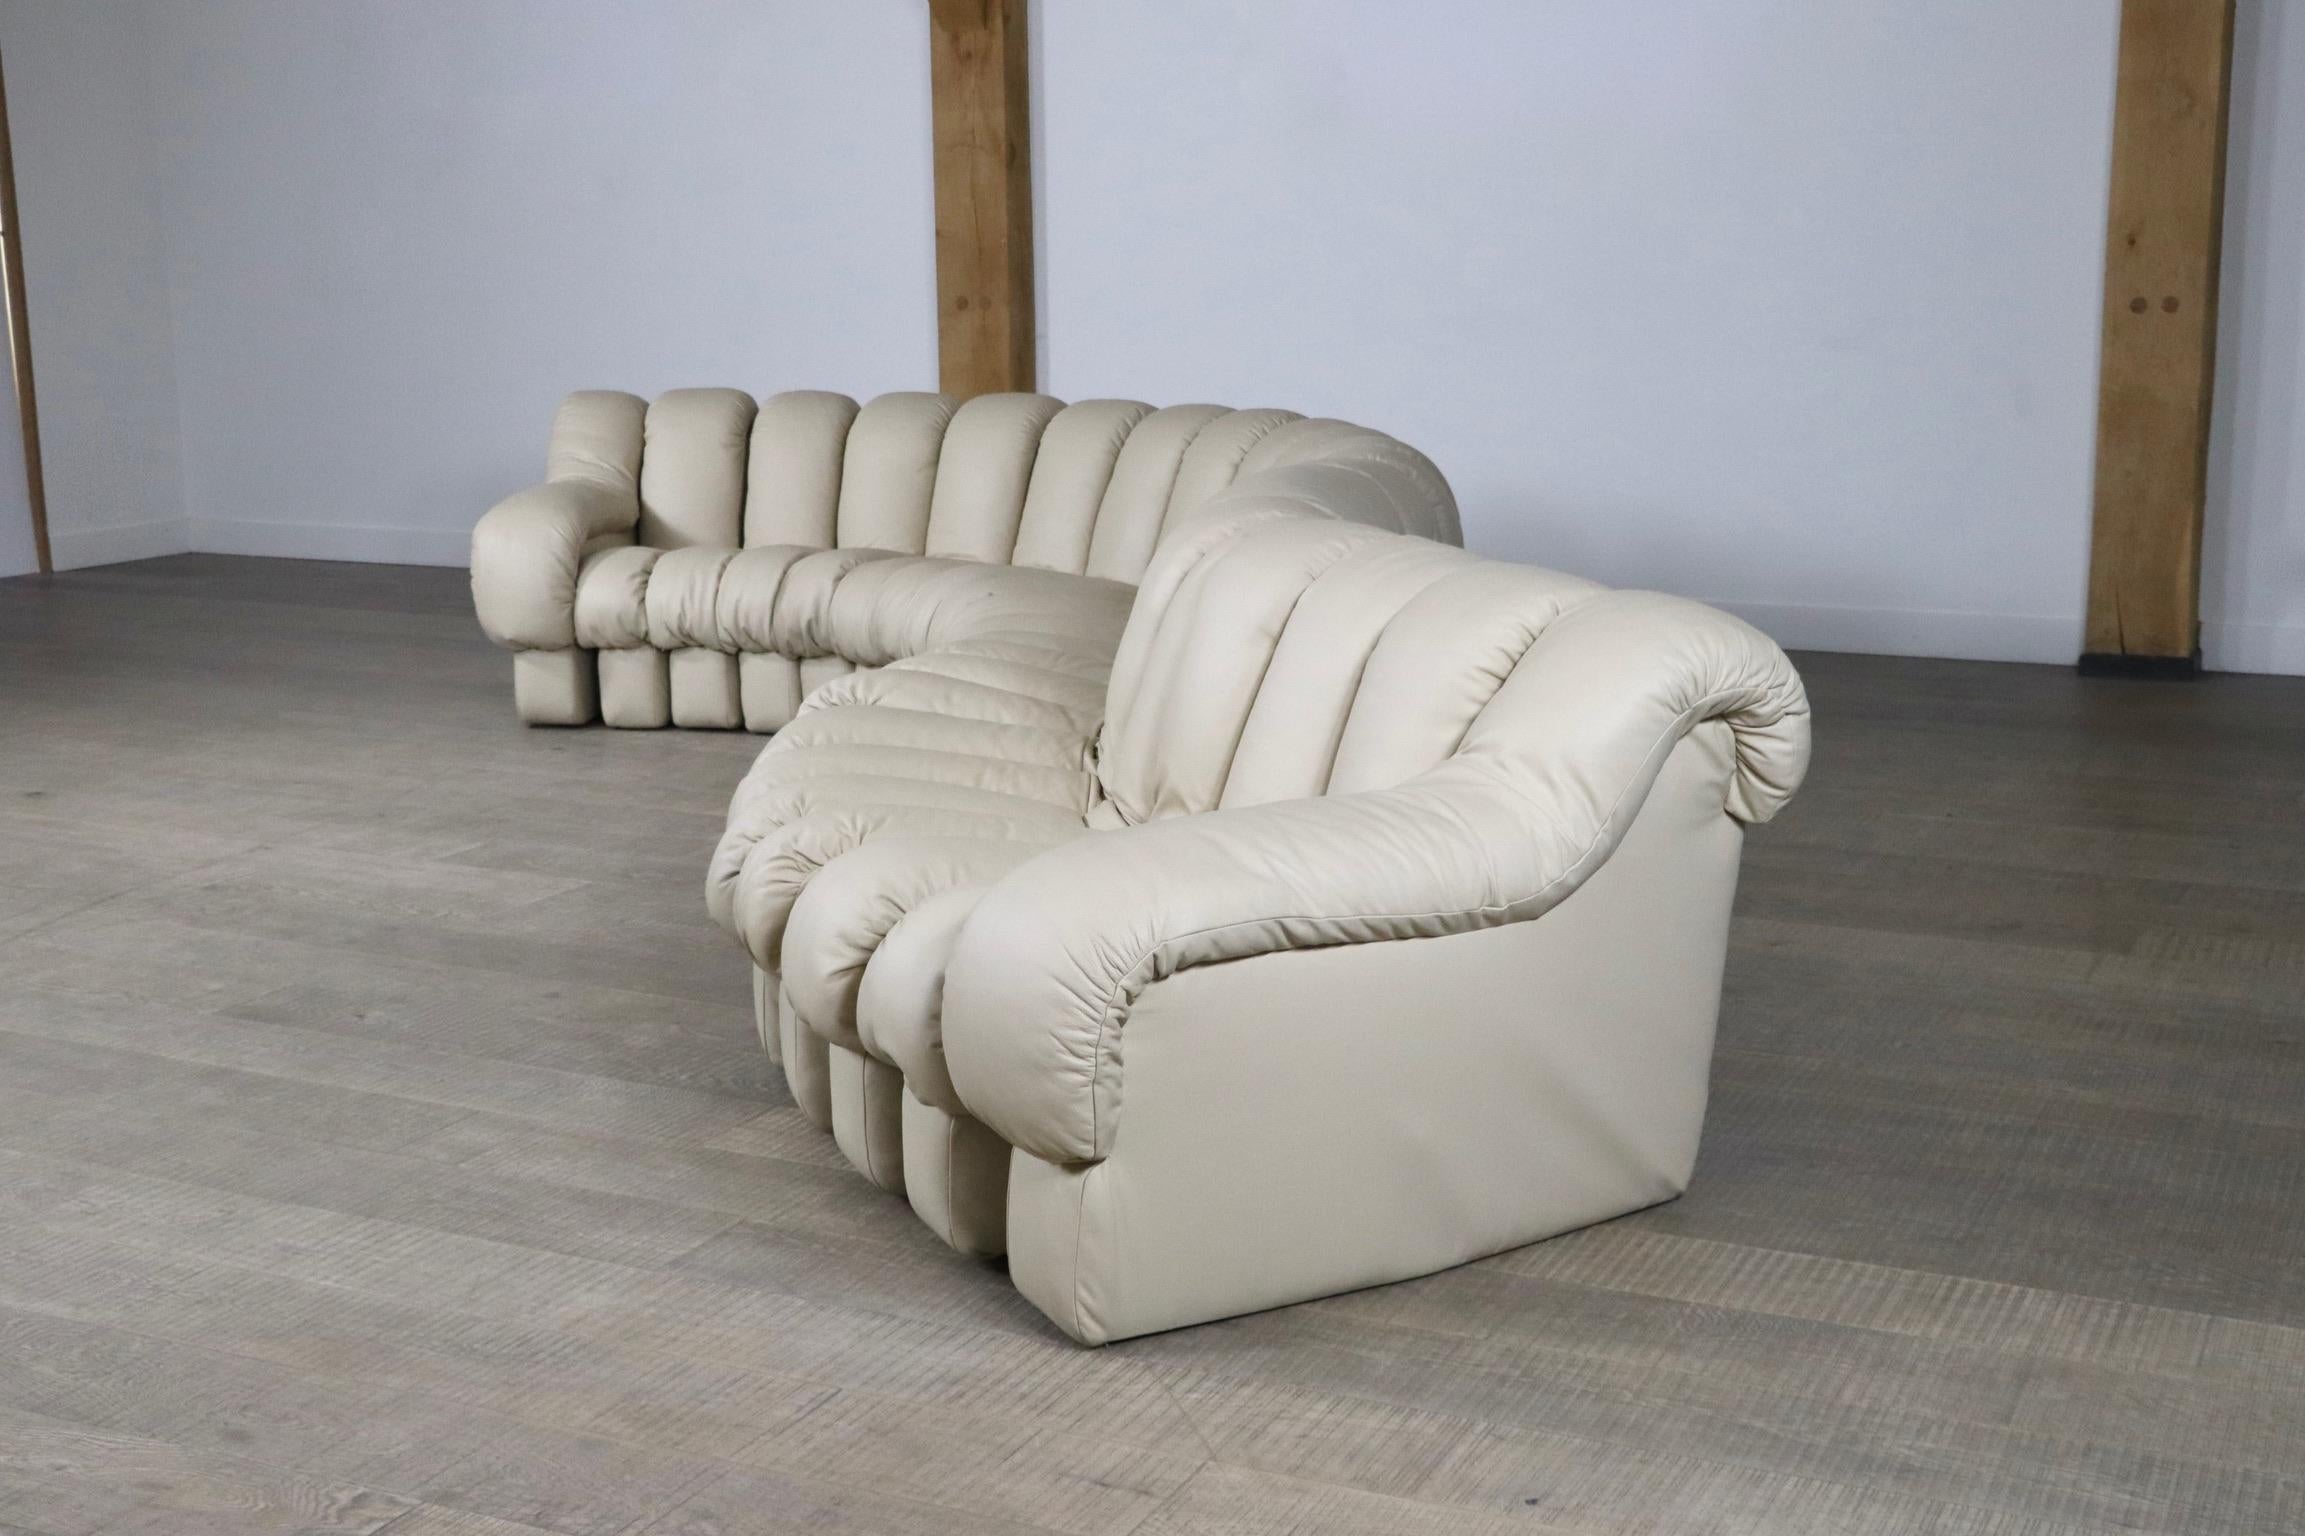 De Sede Ds 600 “Non-Stop” Cream Leather Sofa by Heinz Ulrich, Ueli Berger  9